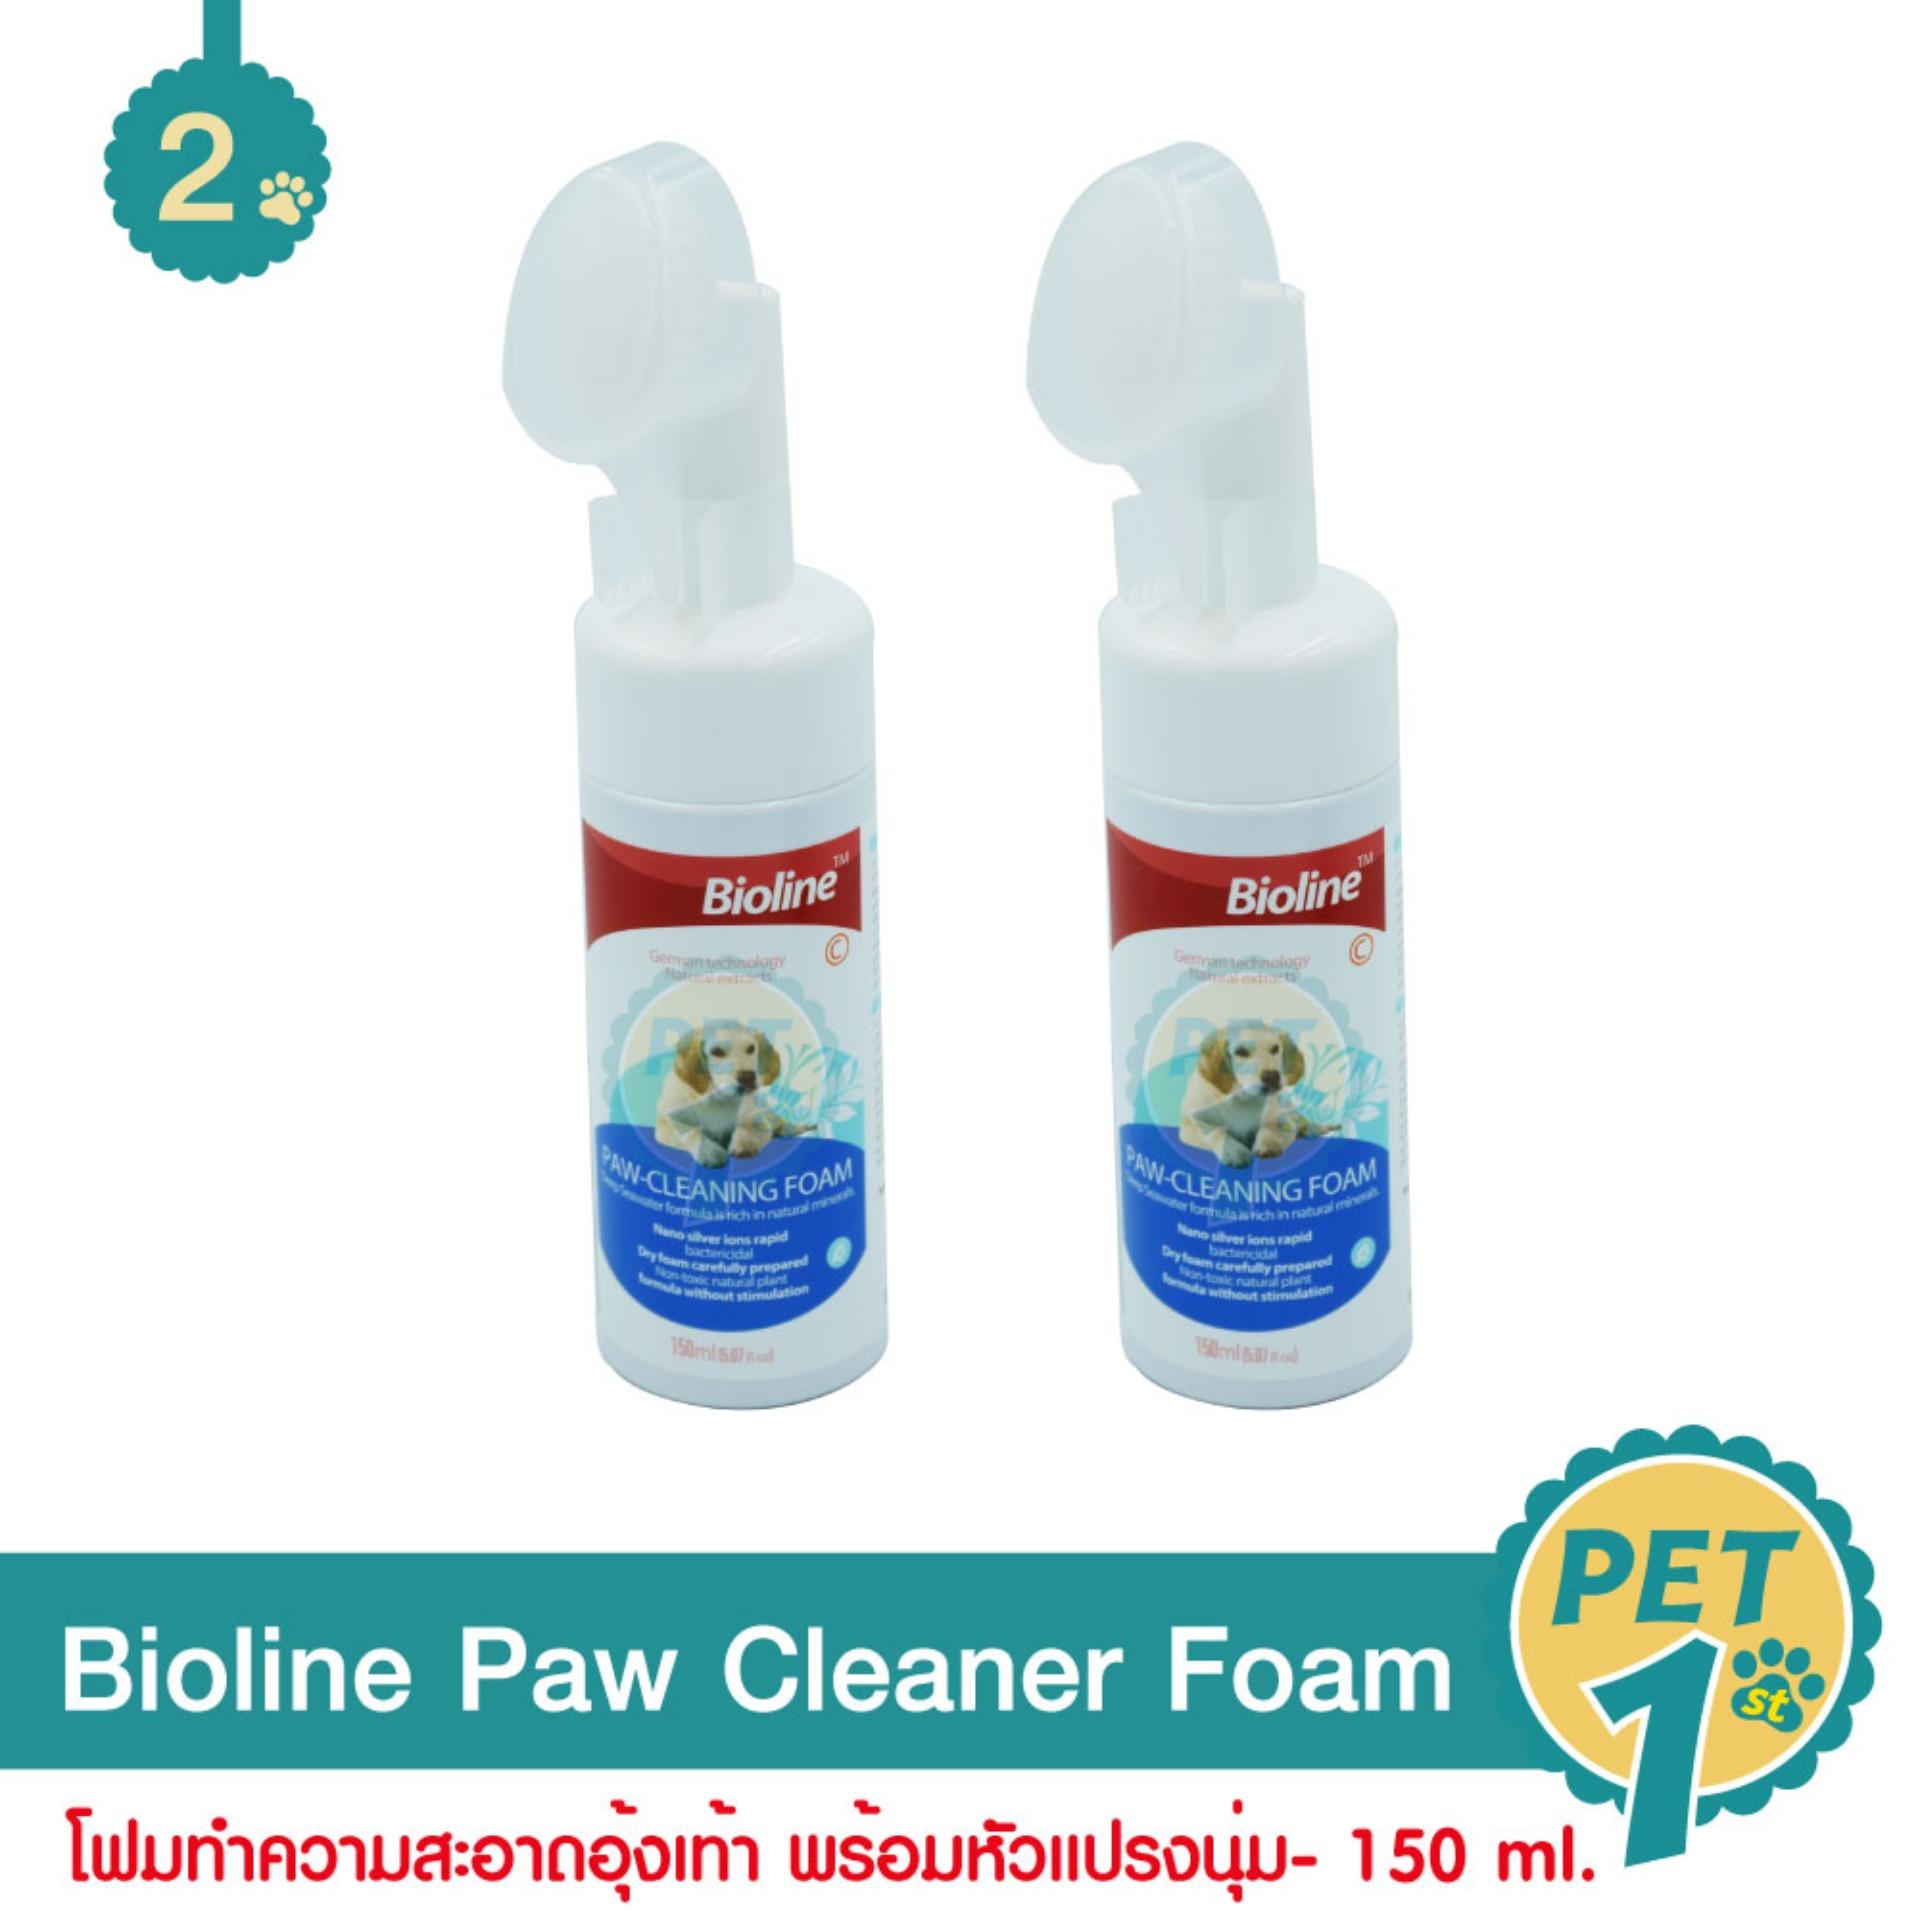 Bioline Paw Cleaner Foam โฟมทำความสะอาดอุ้งเท้า สูตรอ่อนโยน พร้อมหัวแปรงนุ่ม สำหรับสุนัข แมว และกระต่าย 150 ml. - 2 ขวด